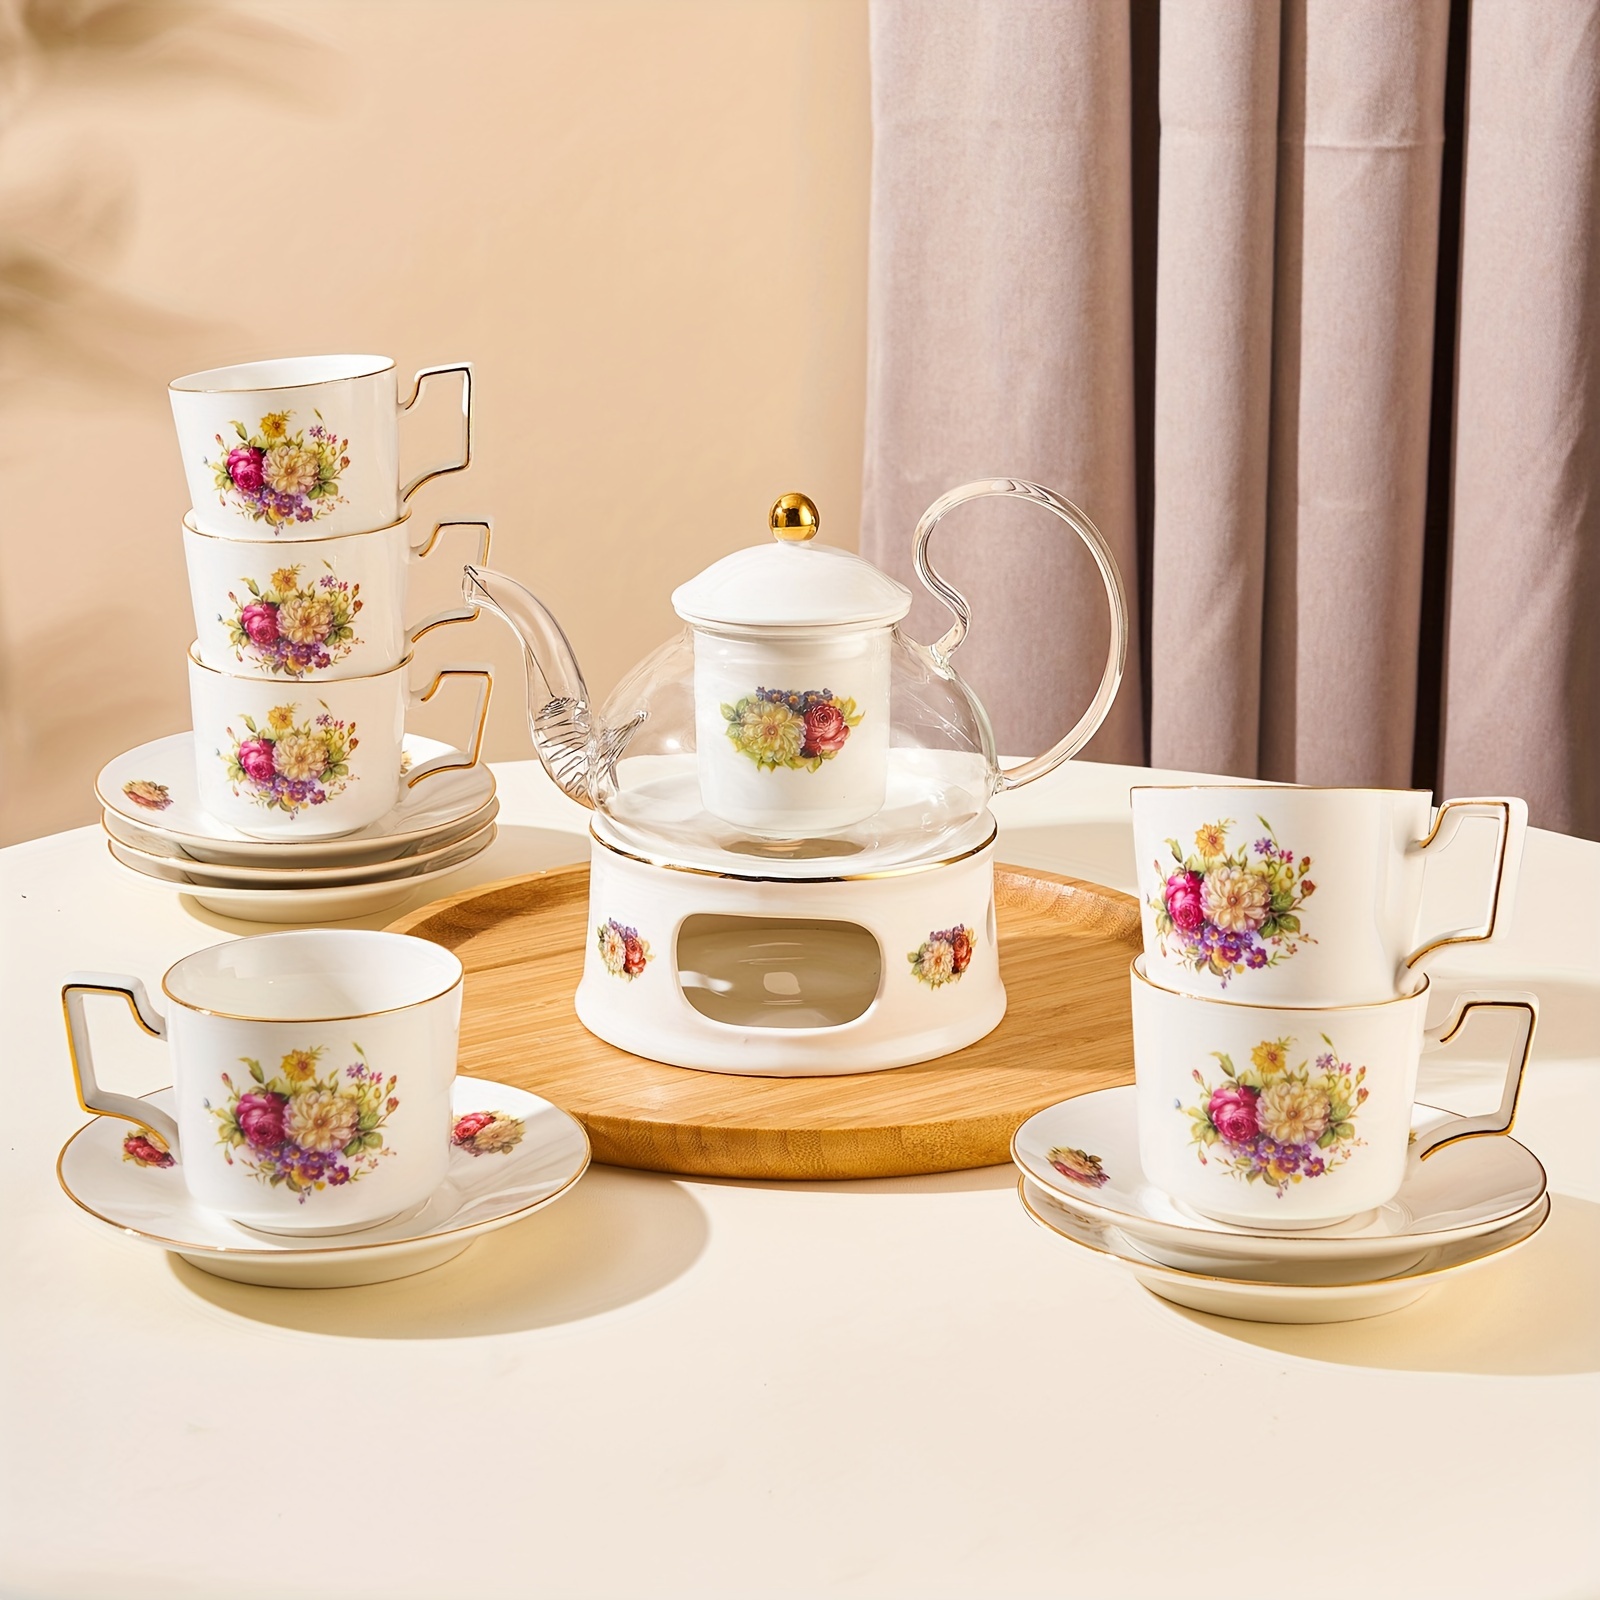 Comprar Tazas de té, Tienda de Té Online